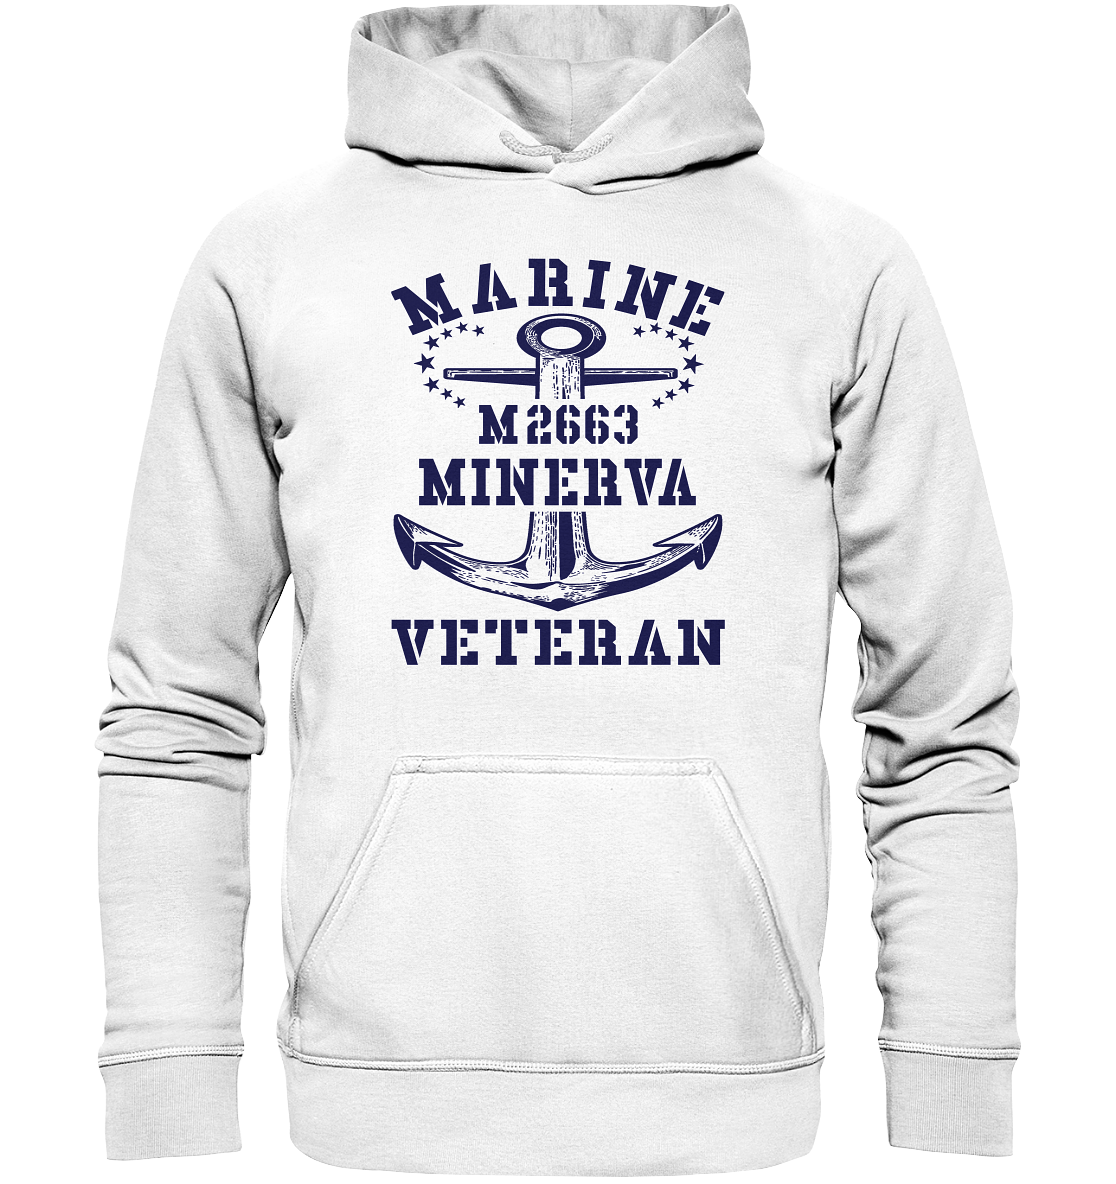 BiMi M2663 MINERVA Marine Veteran - Basic Unisex Hoodie